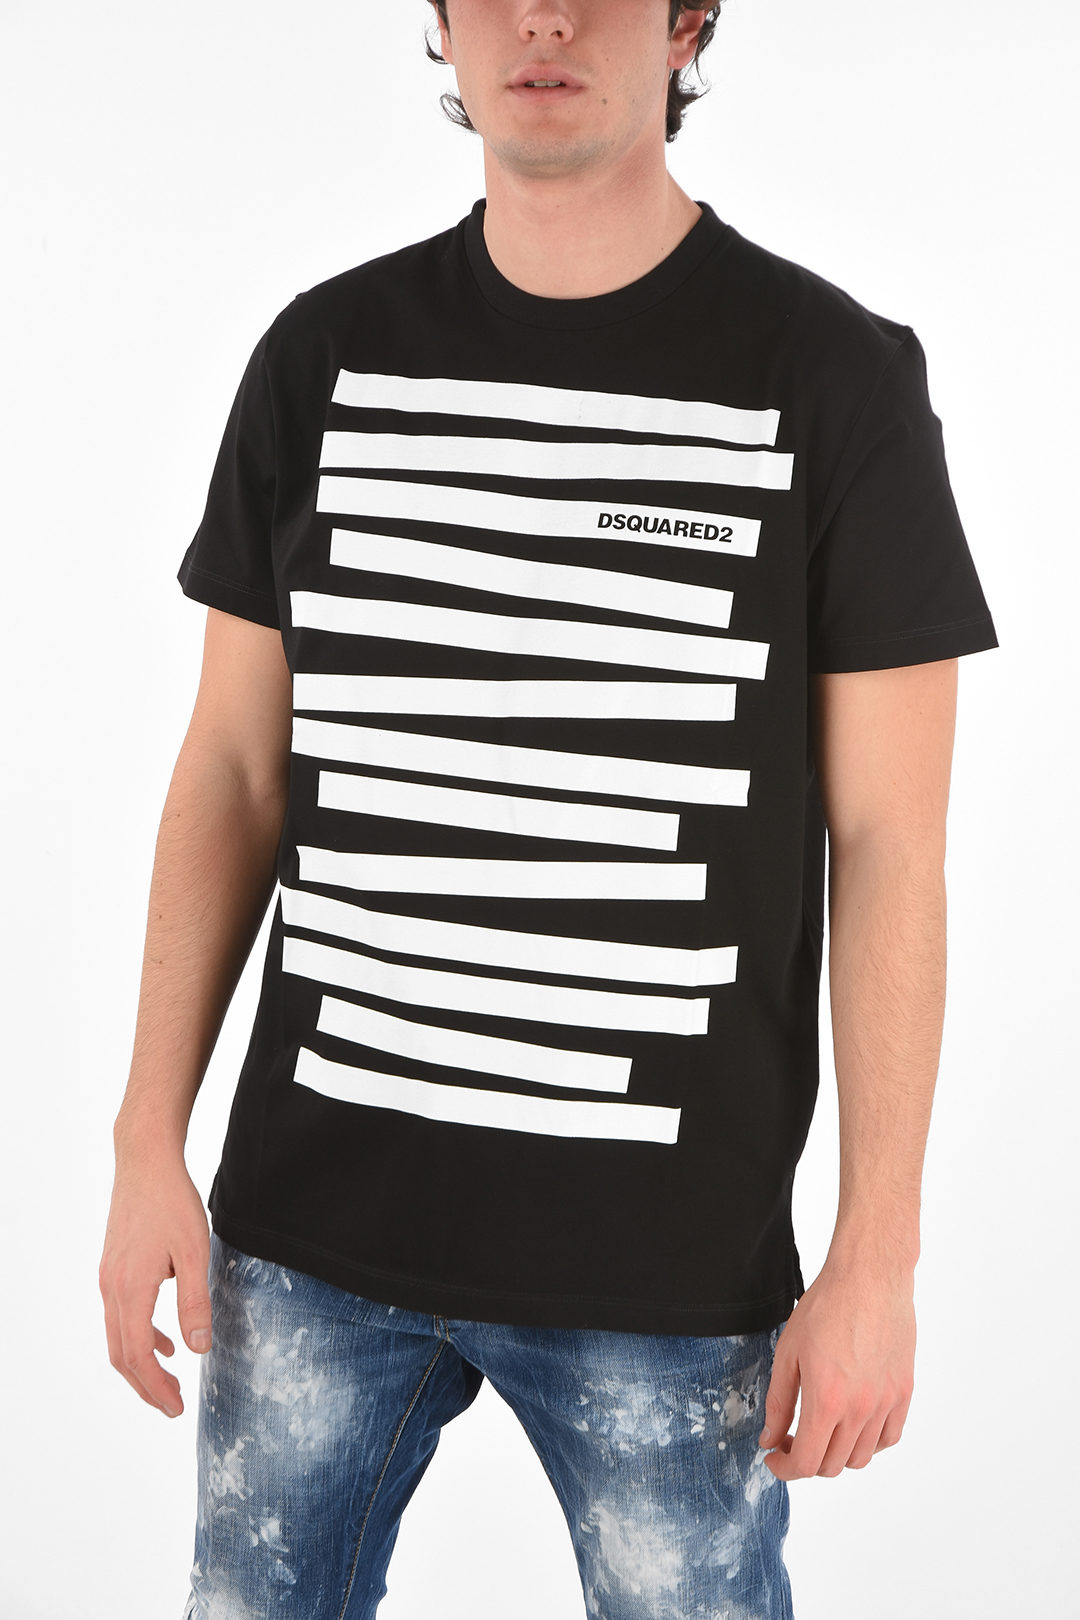 Dsquared2 printed CIGARETTE FIT T-Shirt men - Glamood Outlet